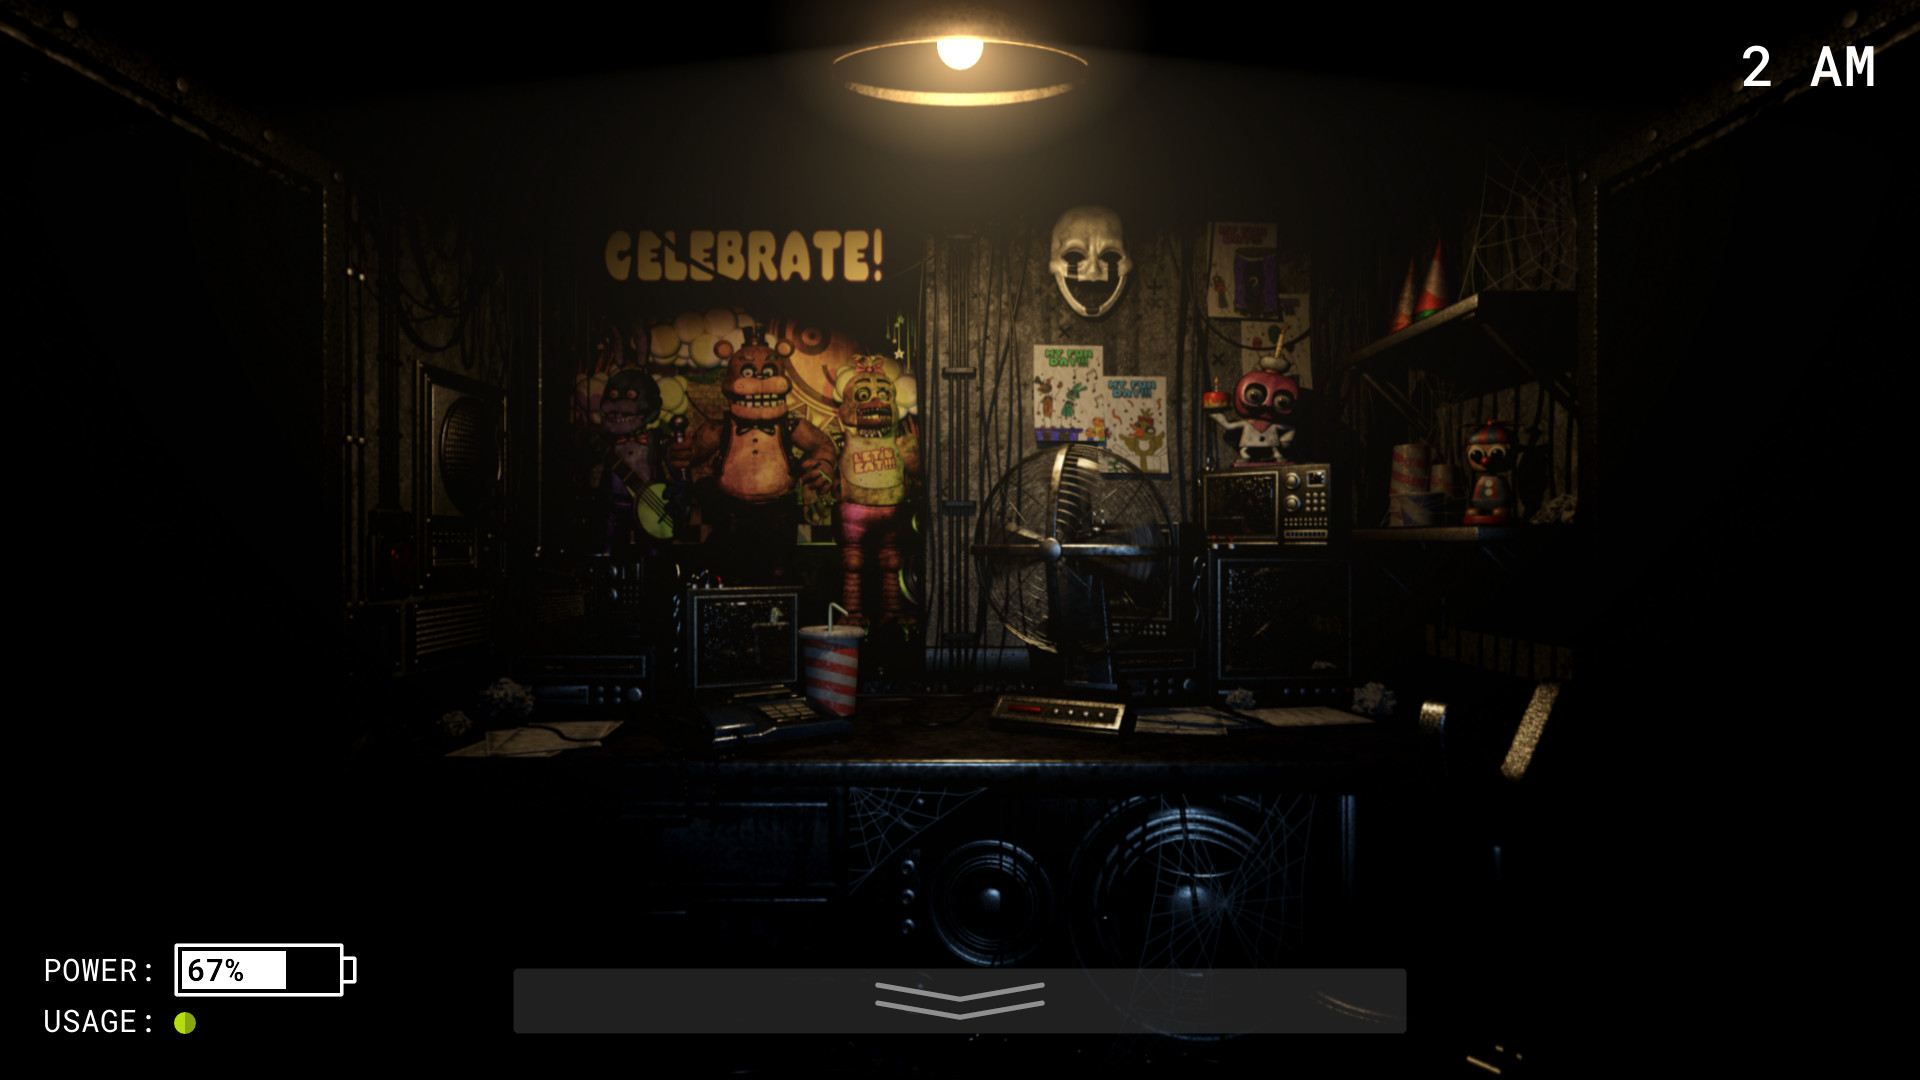 Five Nights at Freddy's Free Download - GameTrex